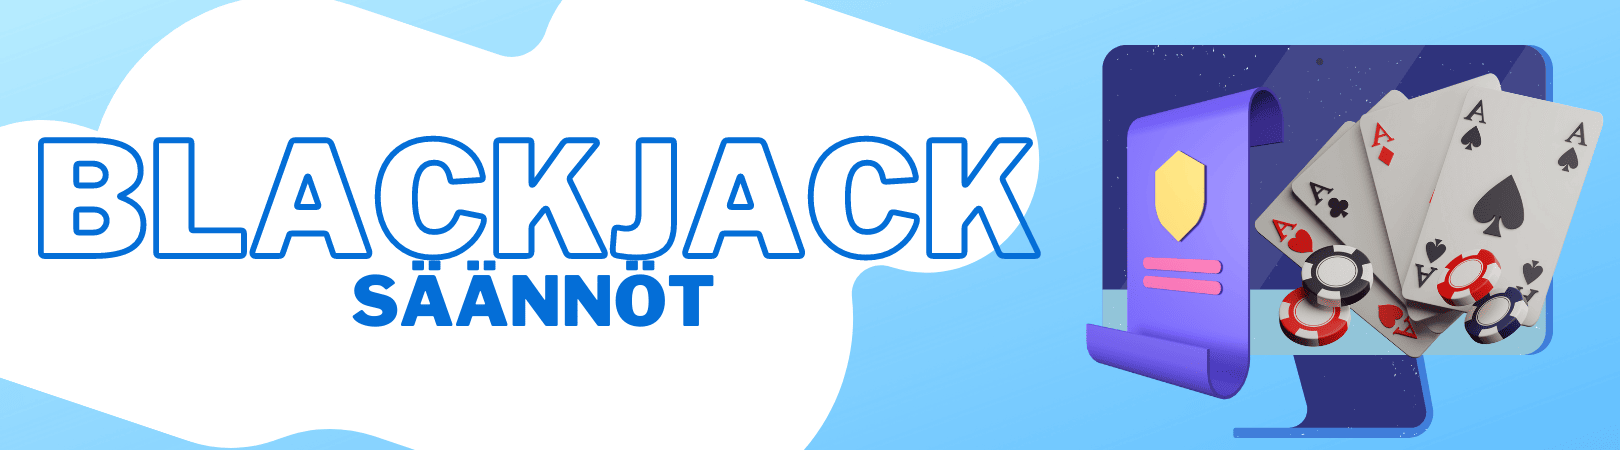 Blackjack säännöt